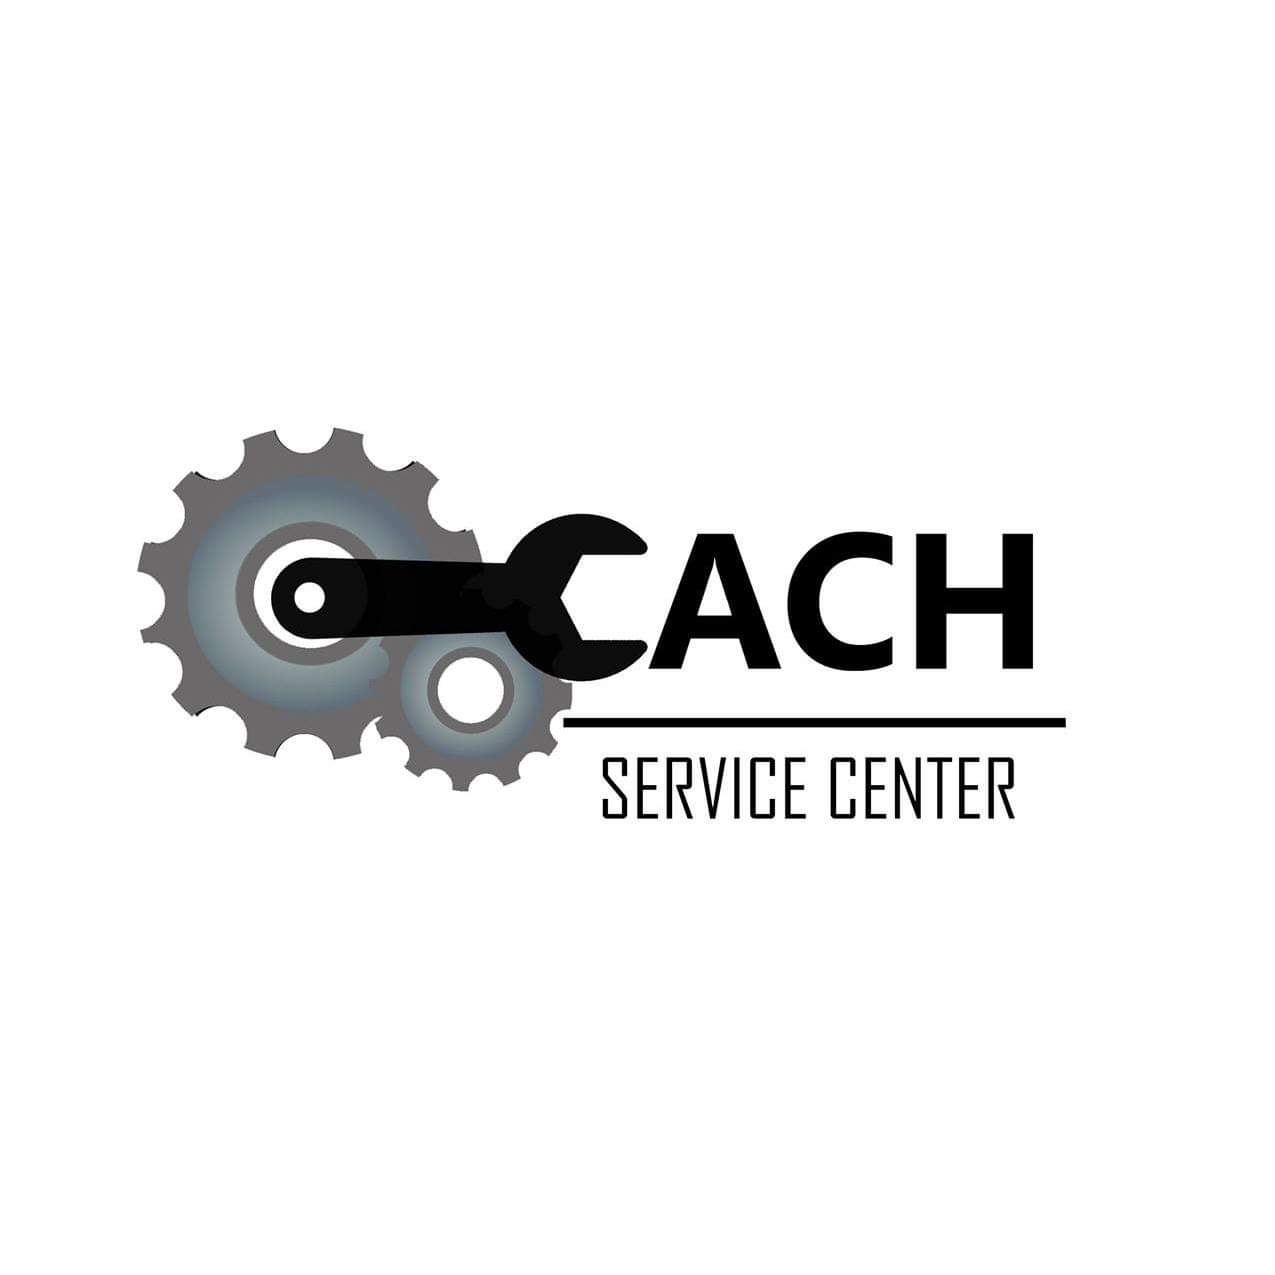 Service Center Cach